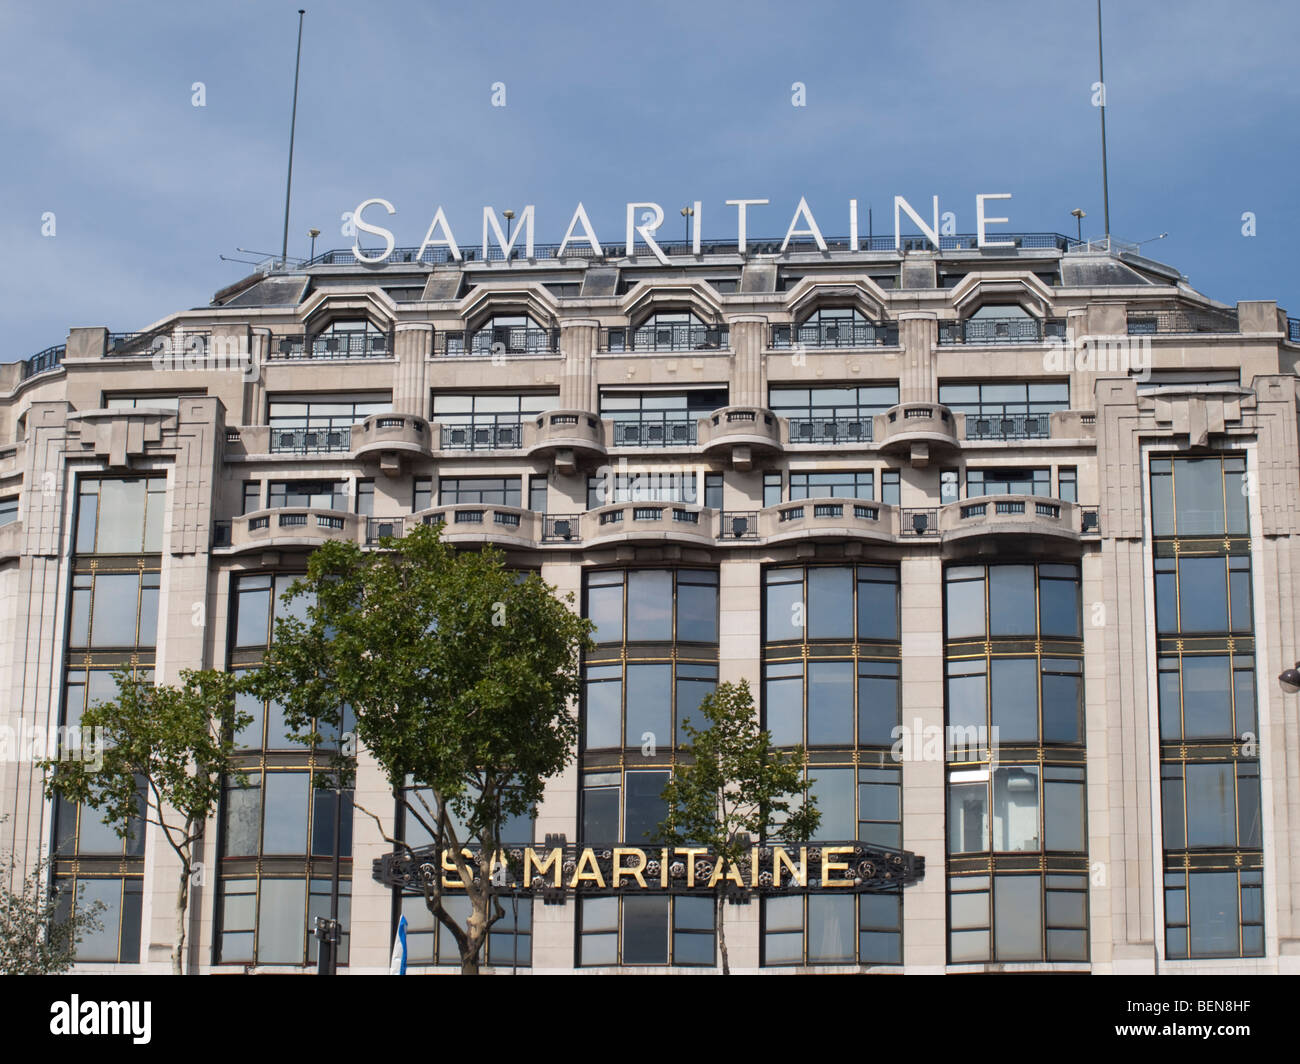 Samaritaine department store, Paris, France Stock Photo - Alamy